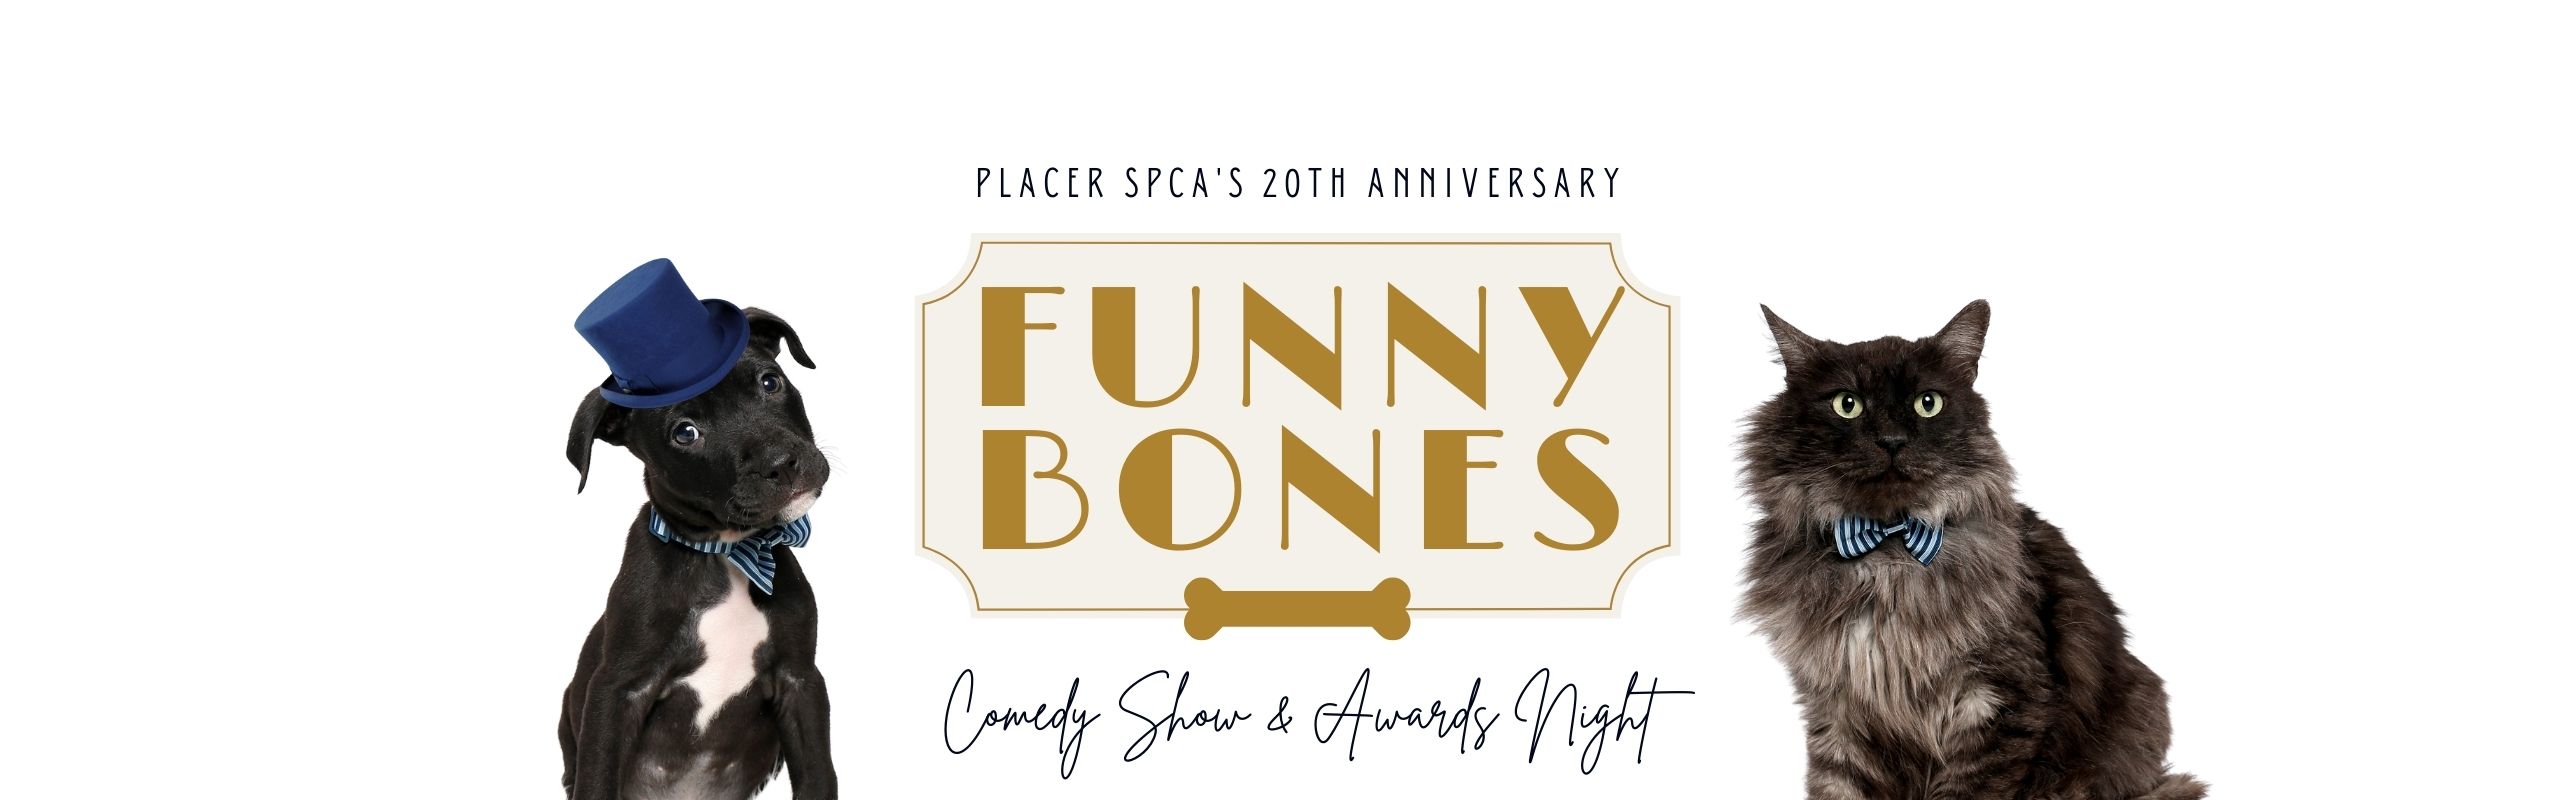 Funny Bones - Hero Nomination - Placer SPCA